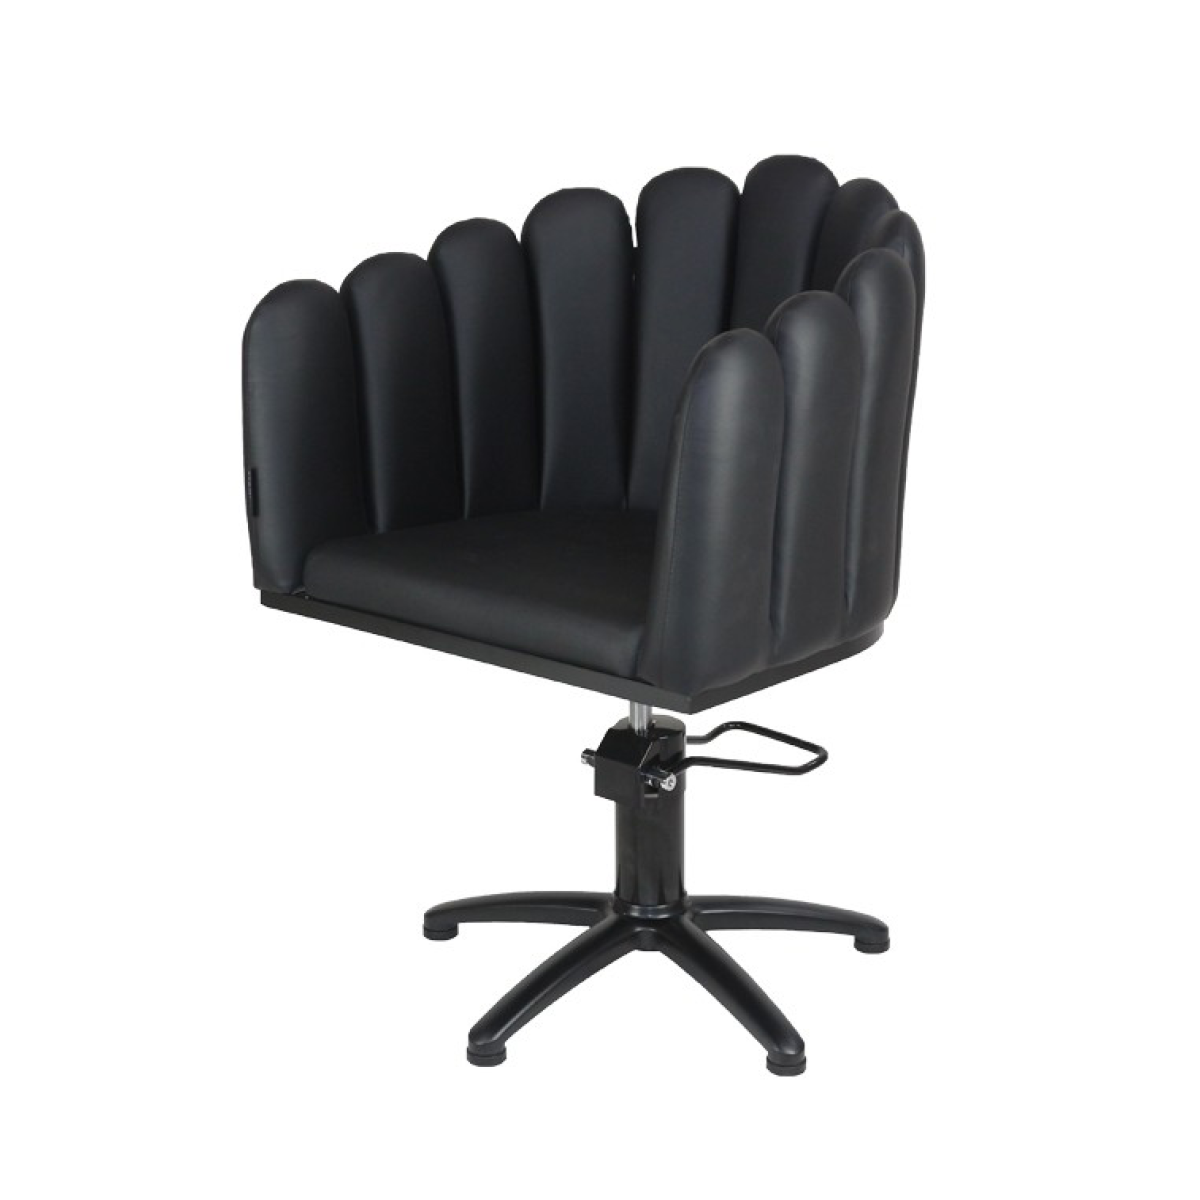 Penelope Styling Chair - Black/chrome 5 Star Hydraulic Base